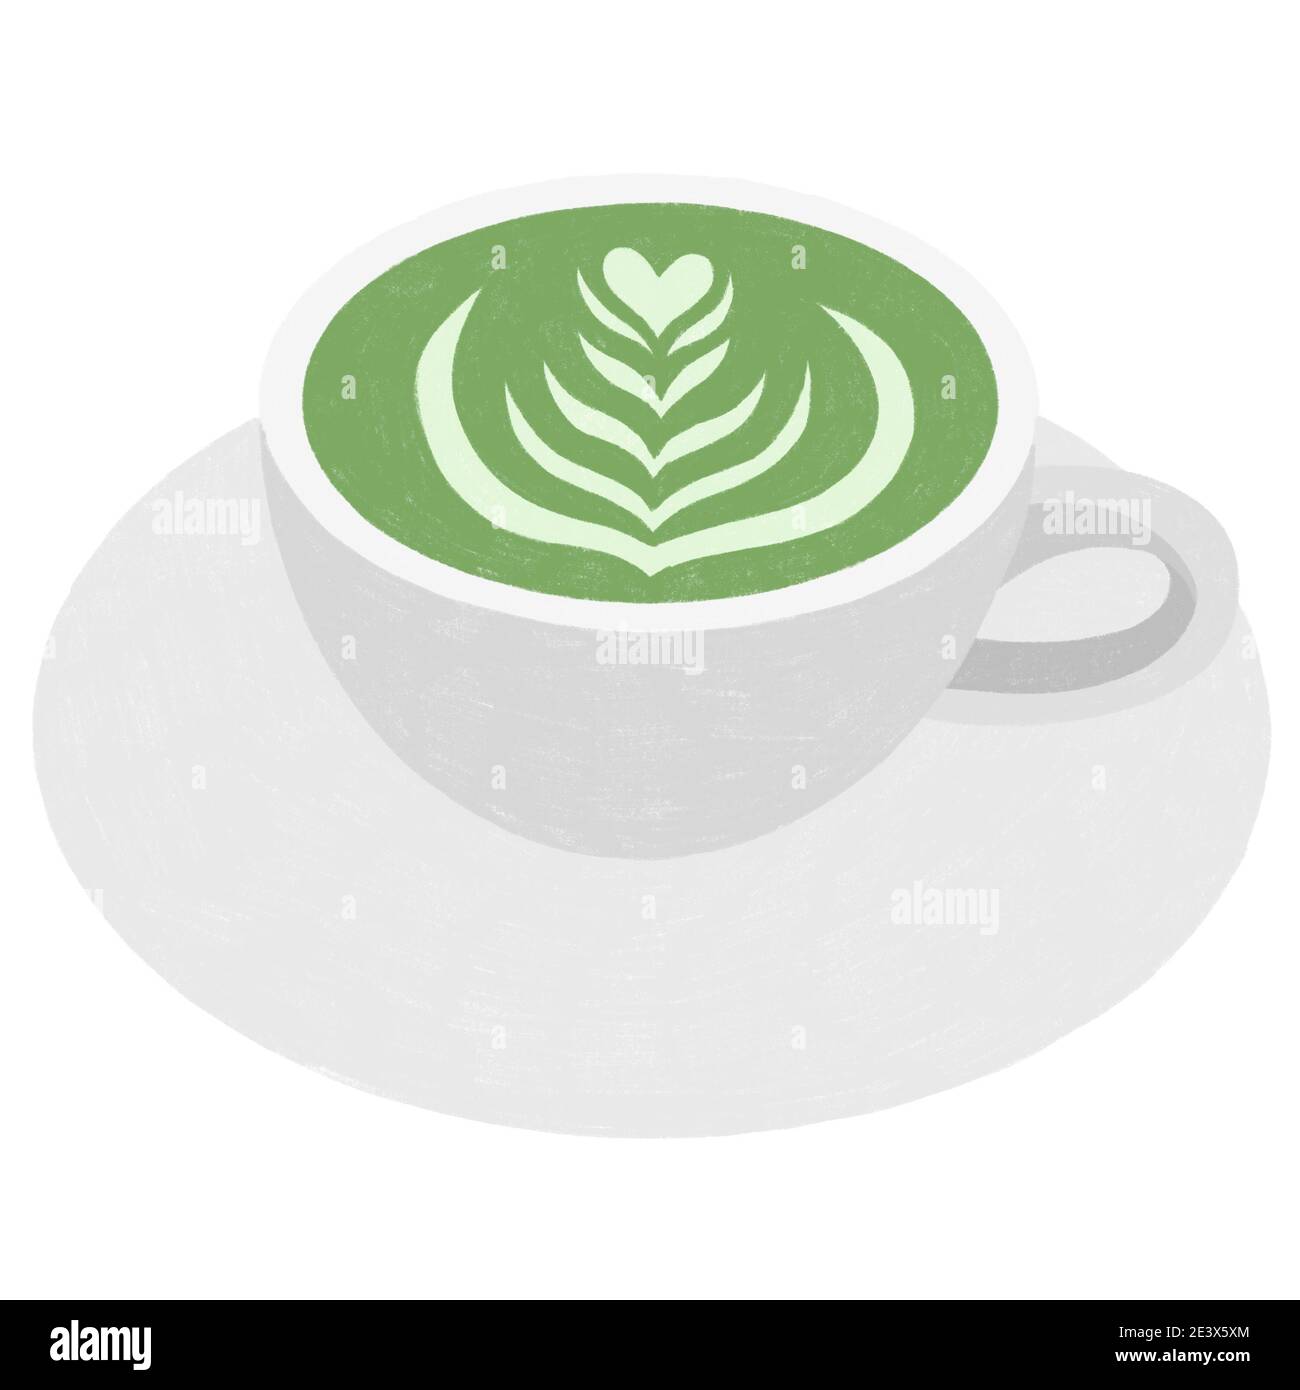 Dottie Digitals - Matcha Green Tea Starbucks Hot Cup SVG Japanese Healthy  Tea PNG DXF Cutting File 16oz Grande Instant Digital Download Travel Coffee